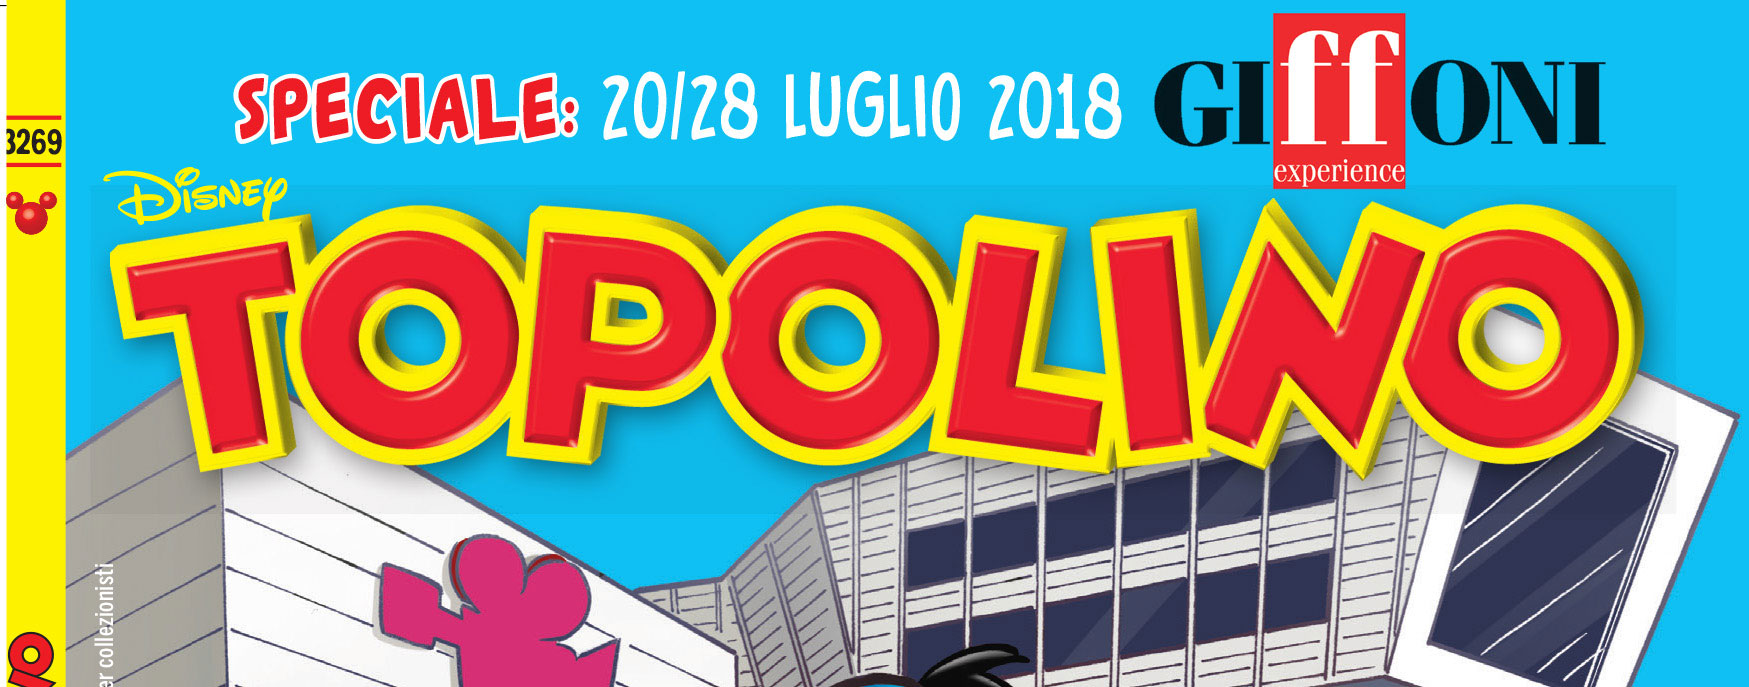 Topolino per Giffoni 2018 [credit: Ufficio Stampa Giffoni Experience]